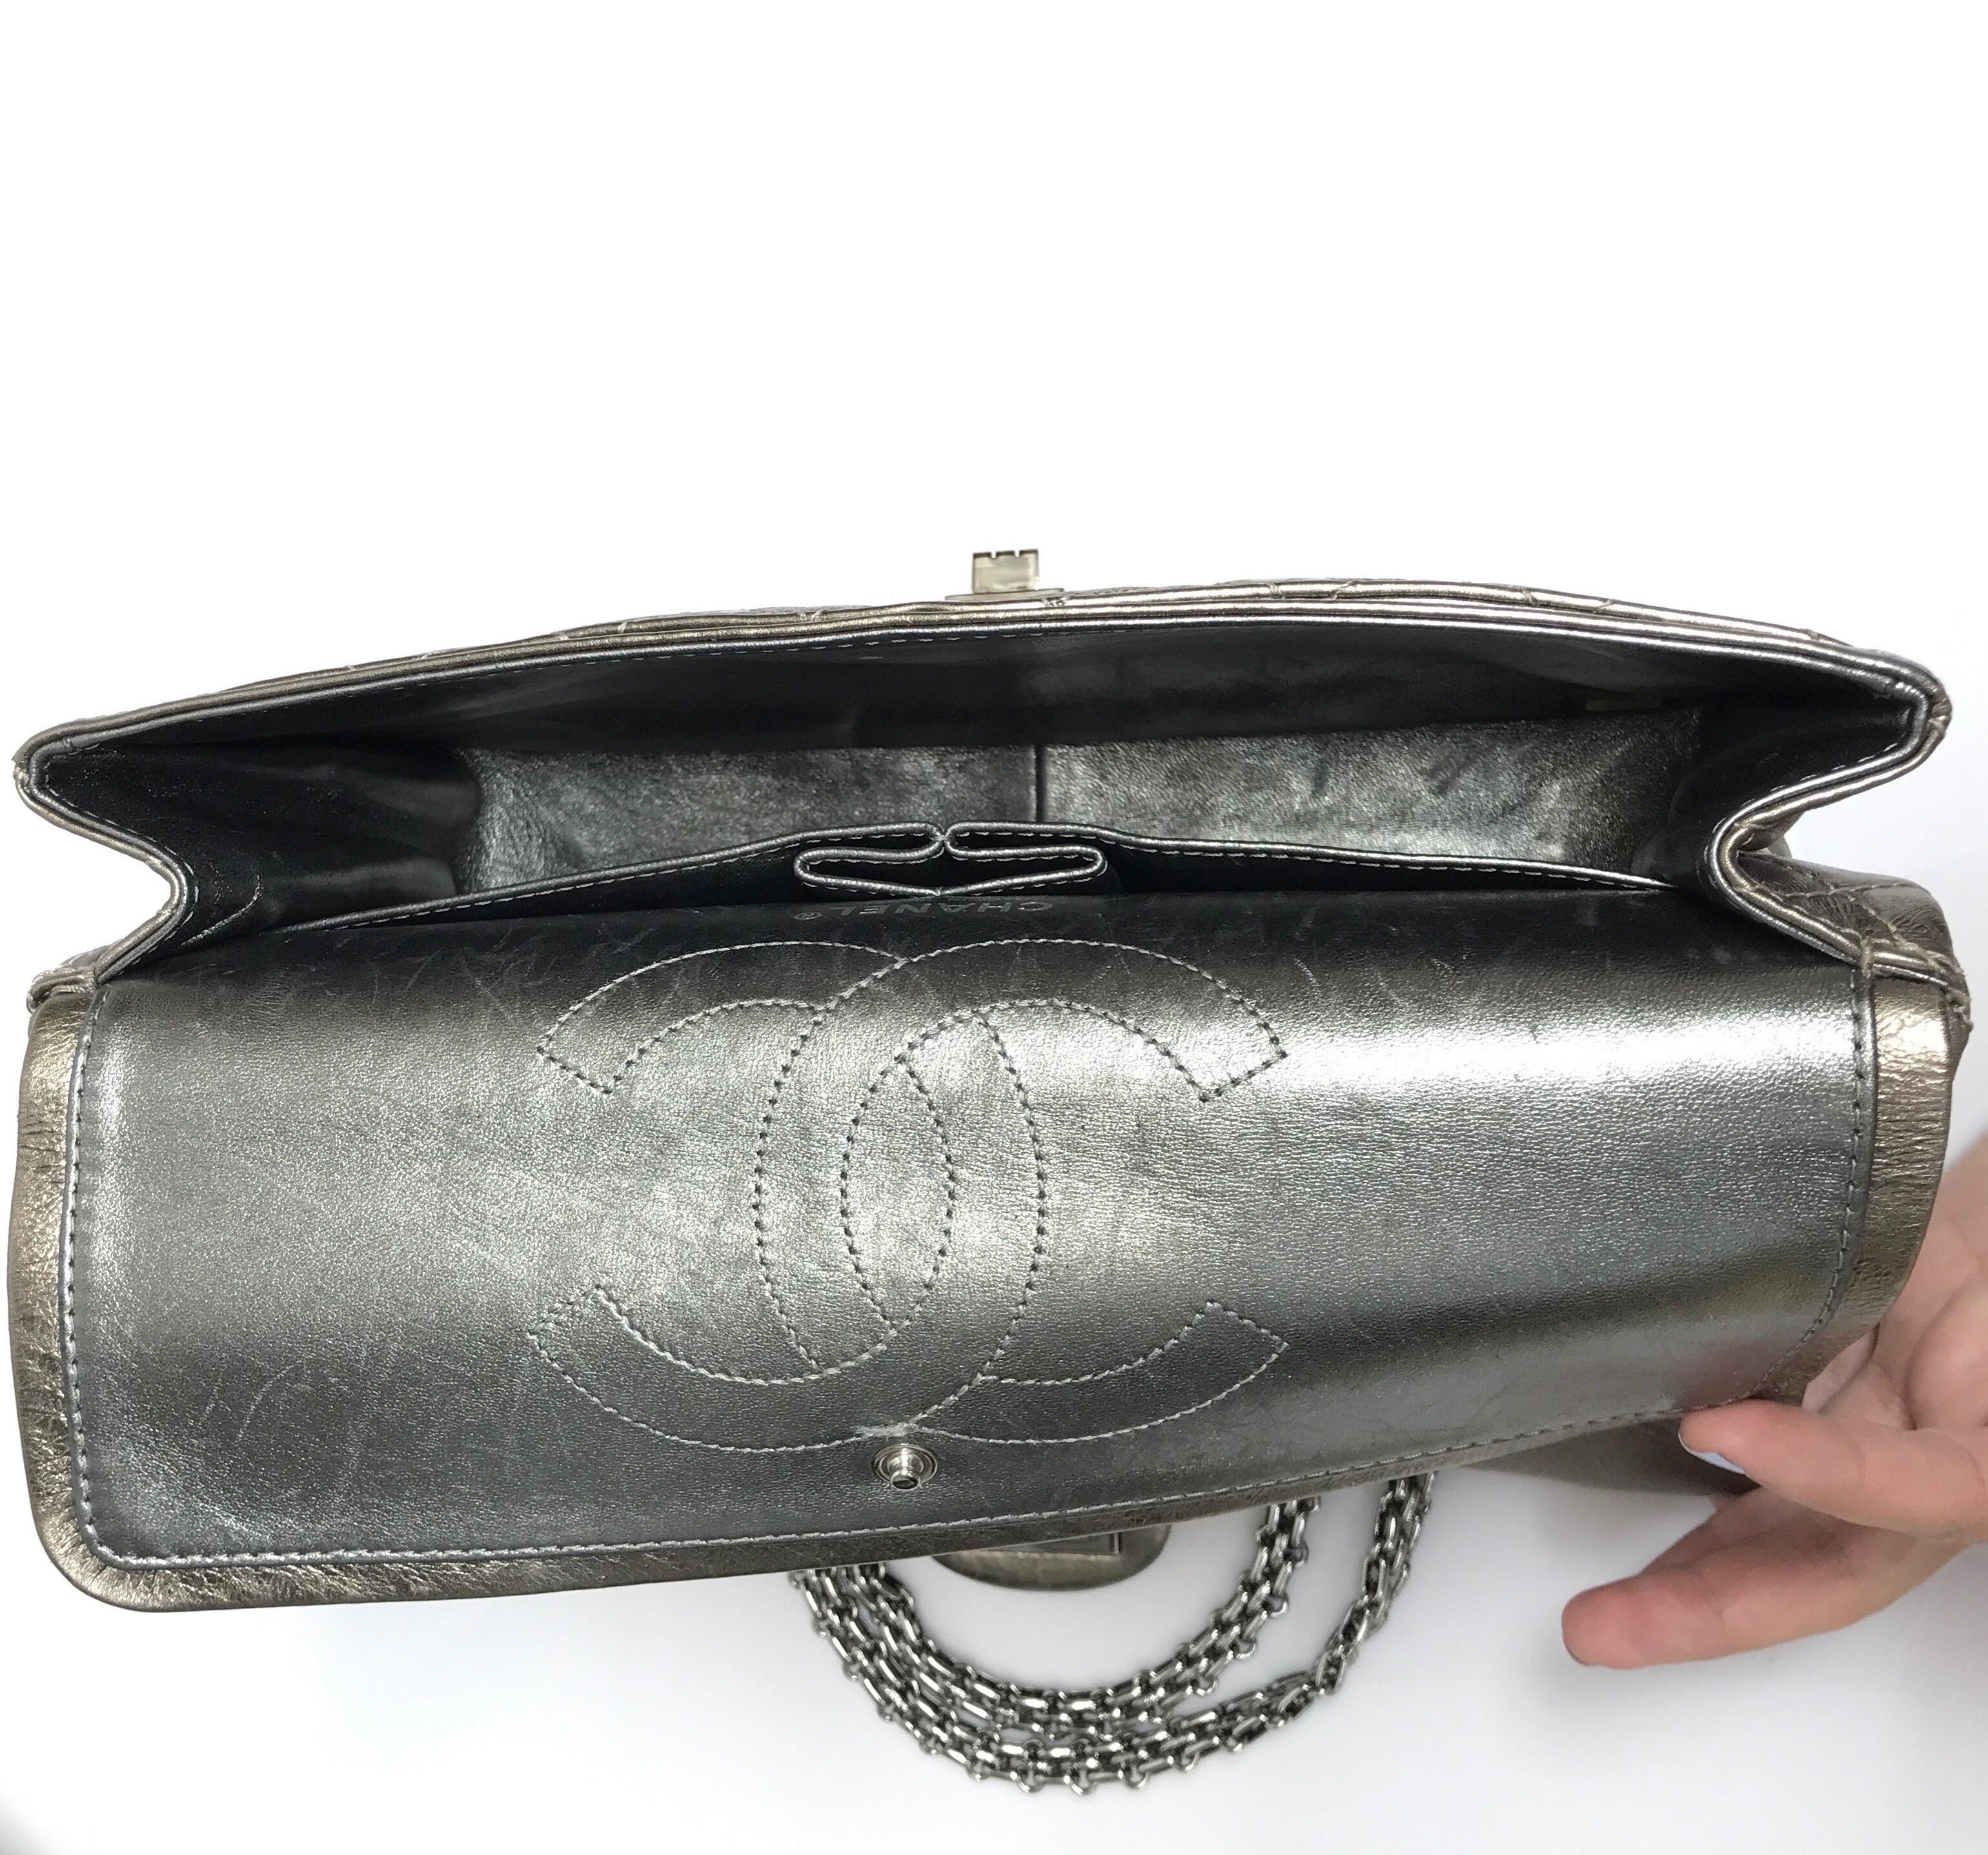 Chanel bronze metallic Re-issue 226 handbag 3